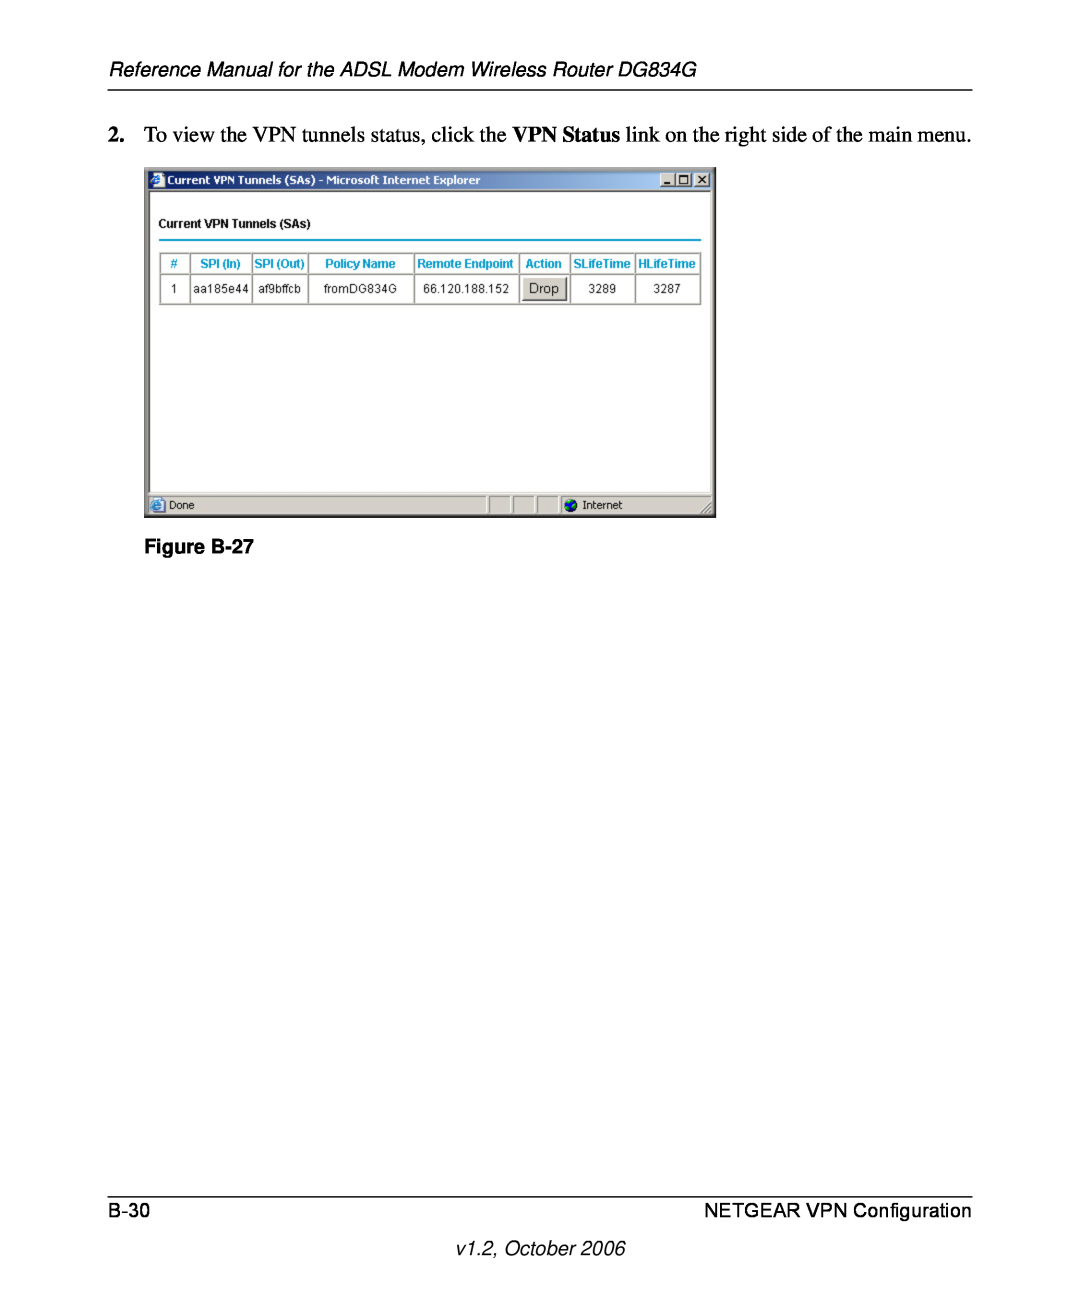 NETGEAR manual Reference Manual for the ADSL Modem Wireless Router DG834G, Figure B-27, B-30, NETGEAR VPN Configuration 